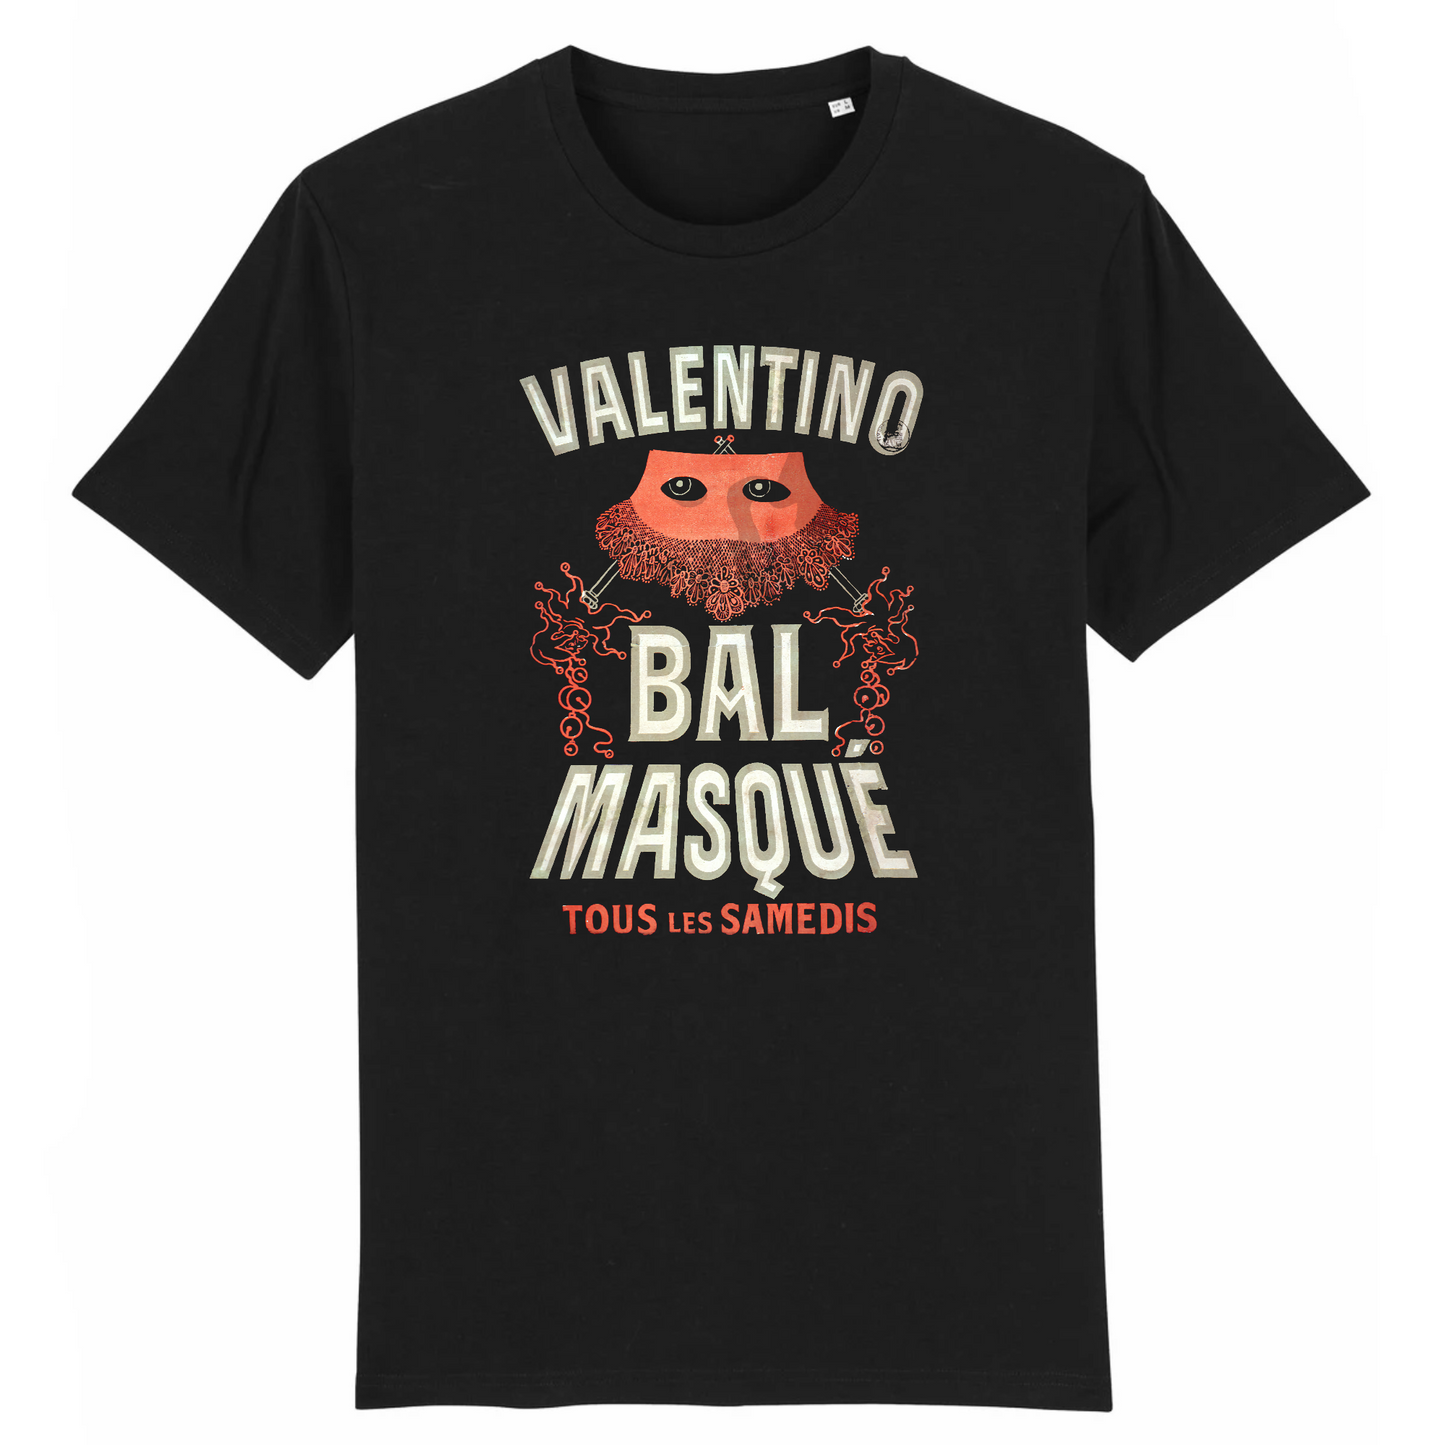 Valentino Bal Masqué de Jules Cheret 1875 - T-shirt en coton bio